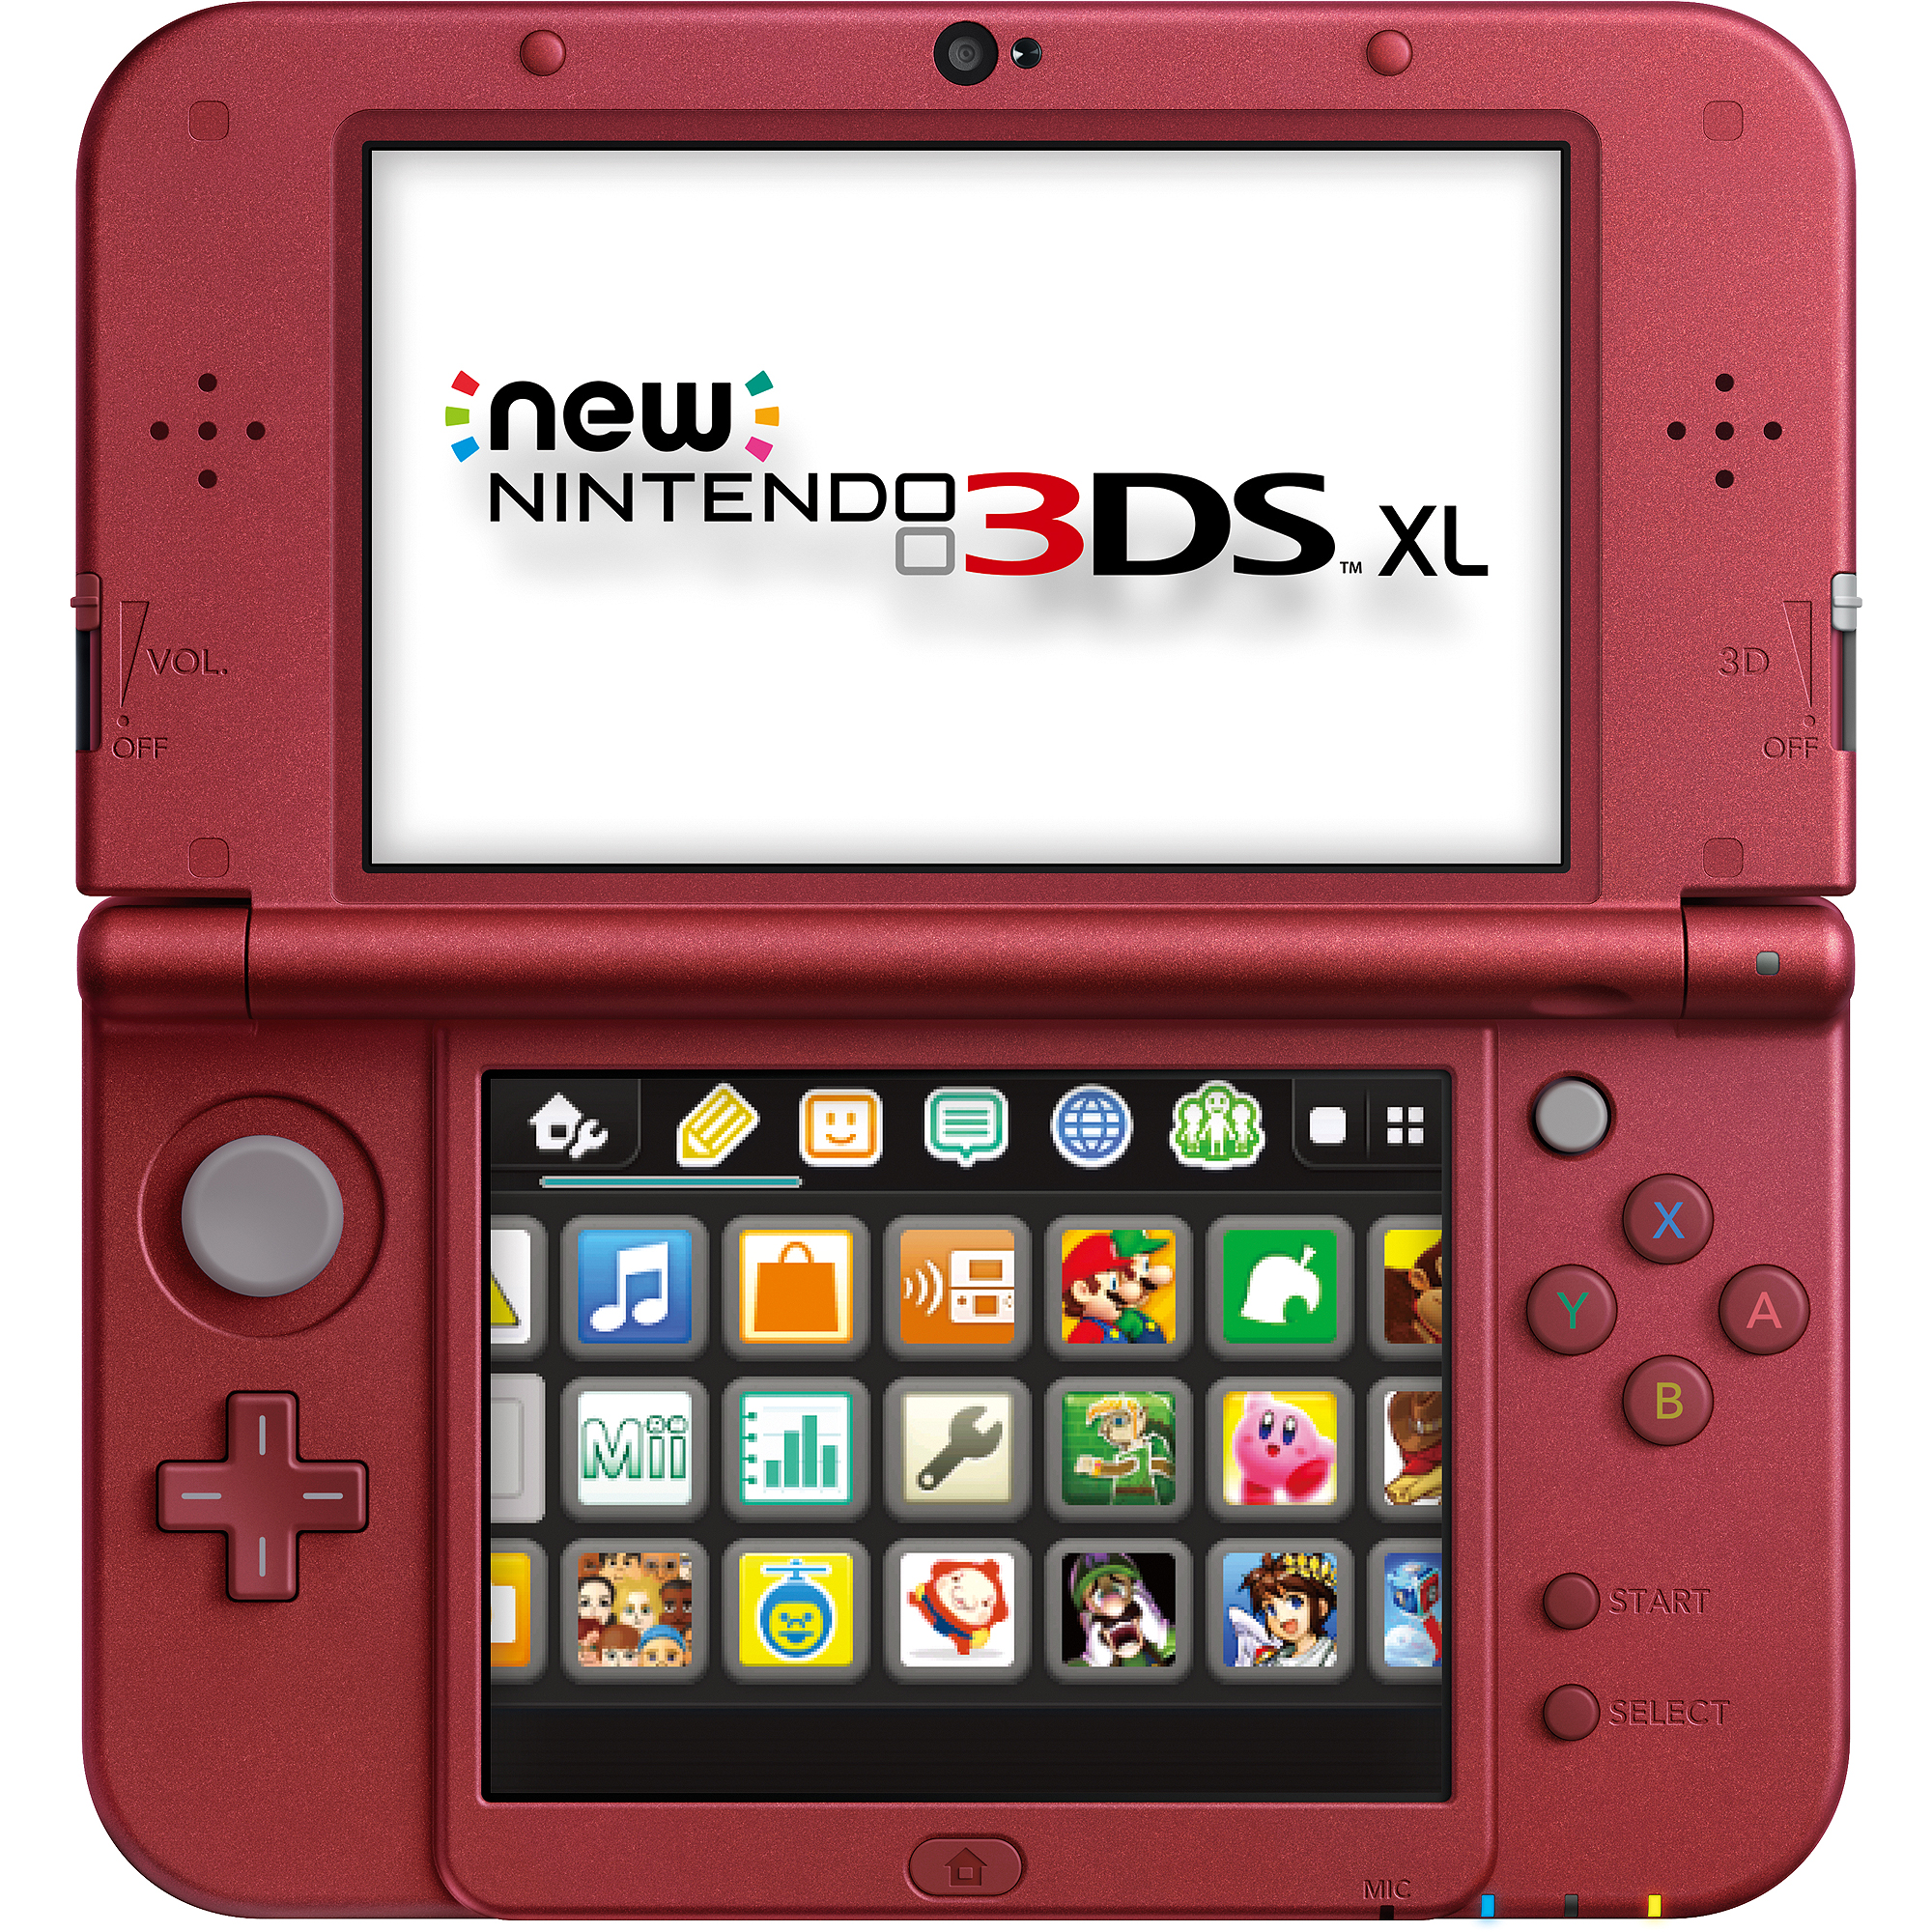 Nintendo 3DS XL Handheld, Red - image 4 of 14